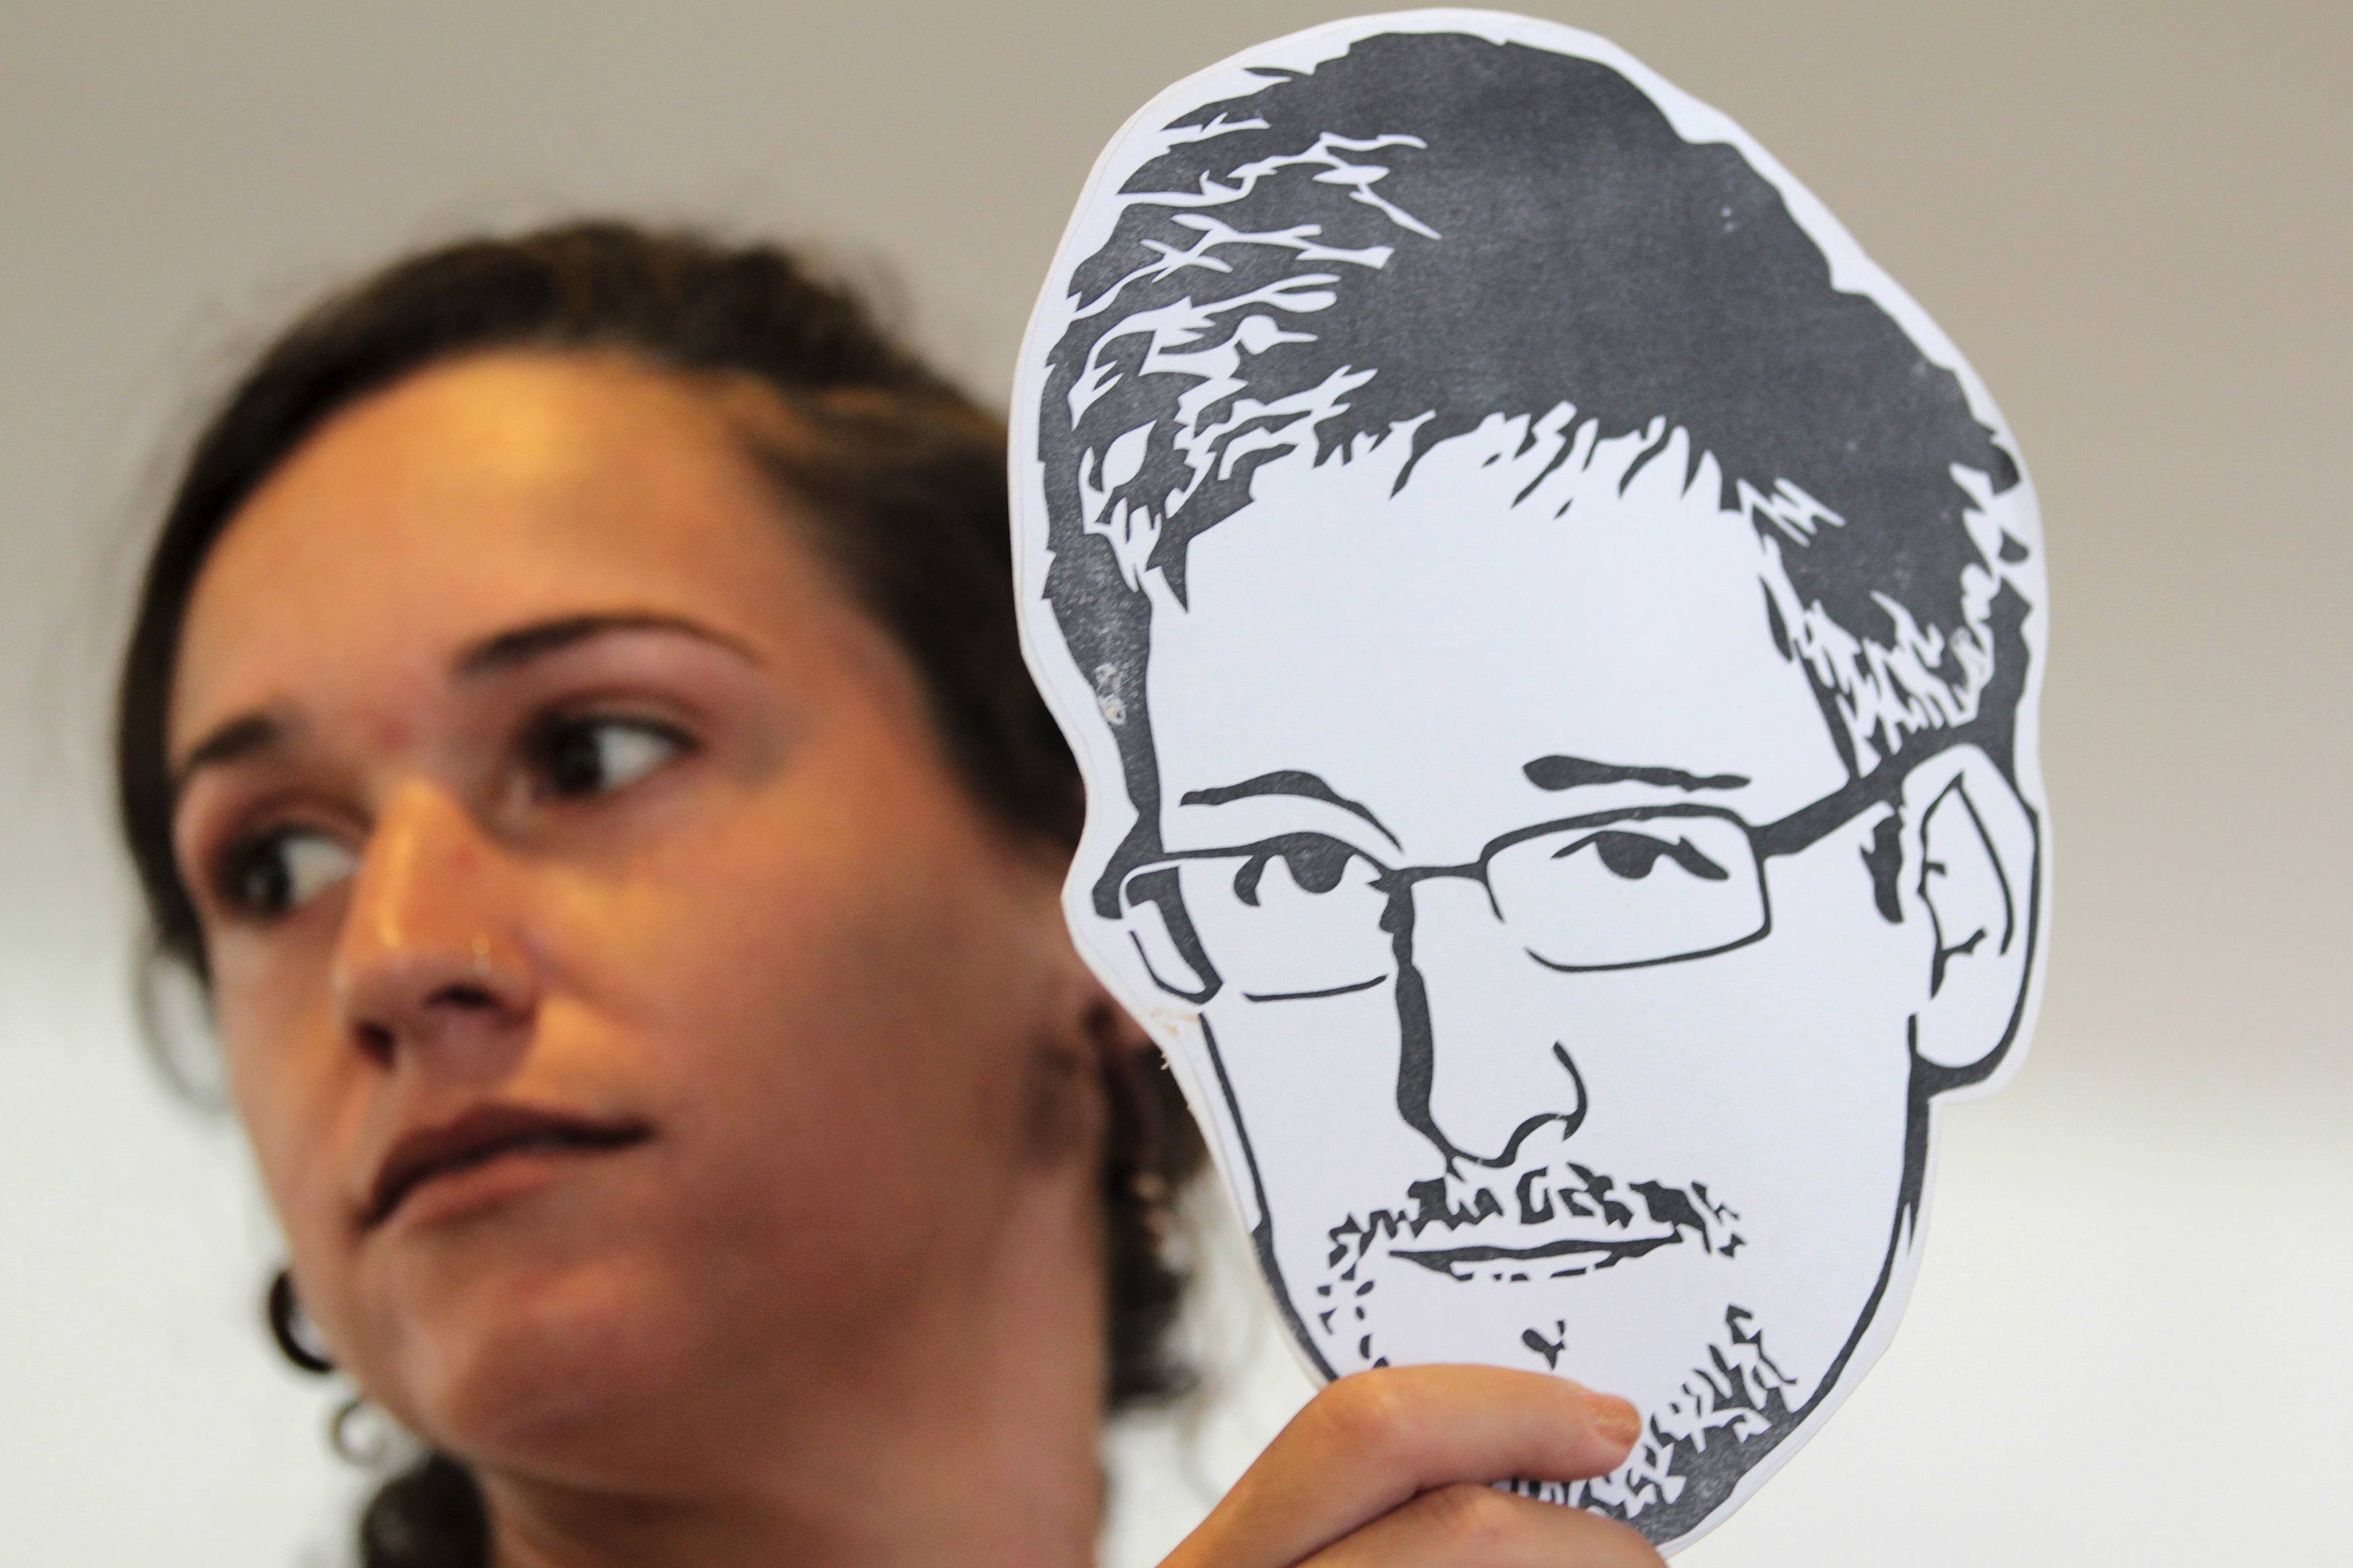 U.S. whistleblower Snowden wins student role at Scottish university